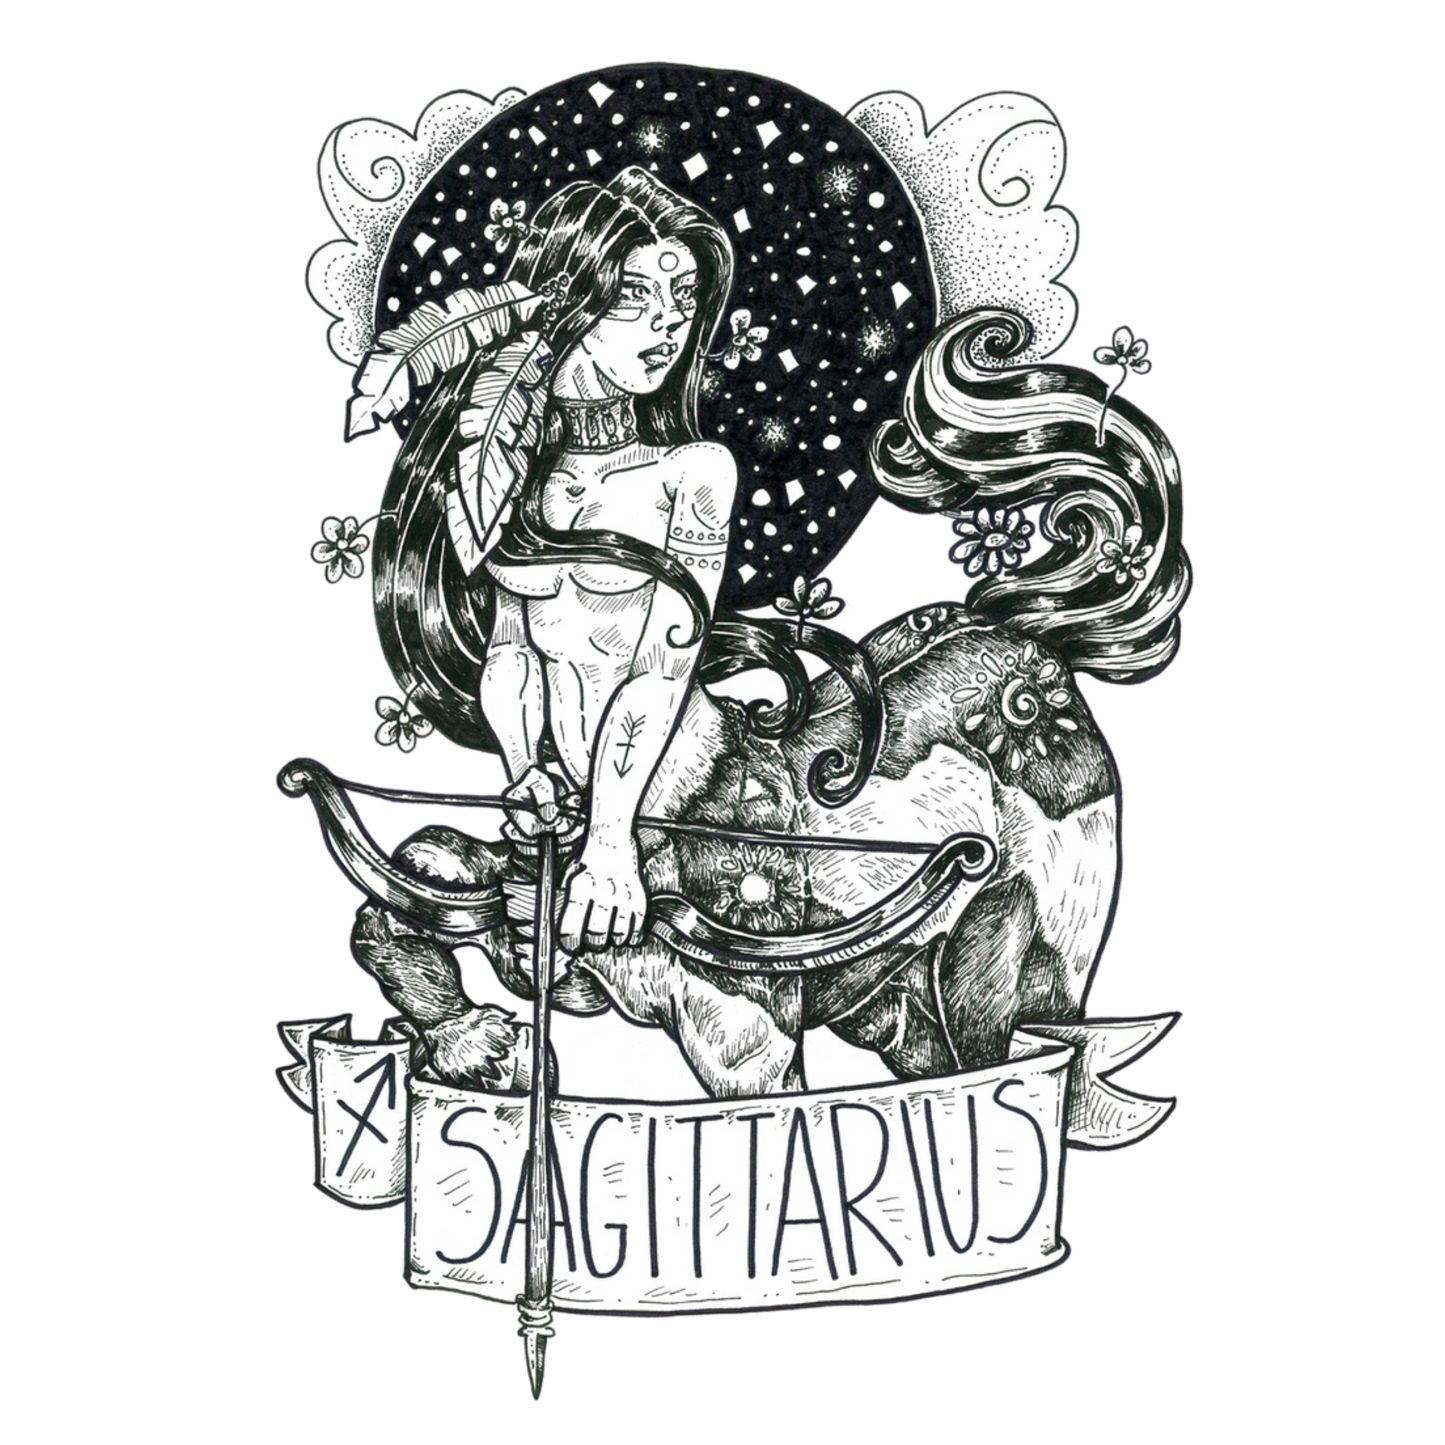 Sagittarius by Wicked Good Perfume